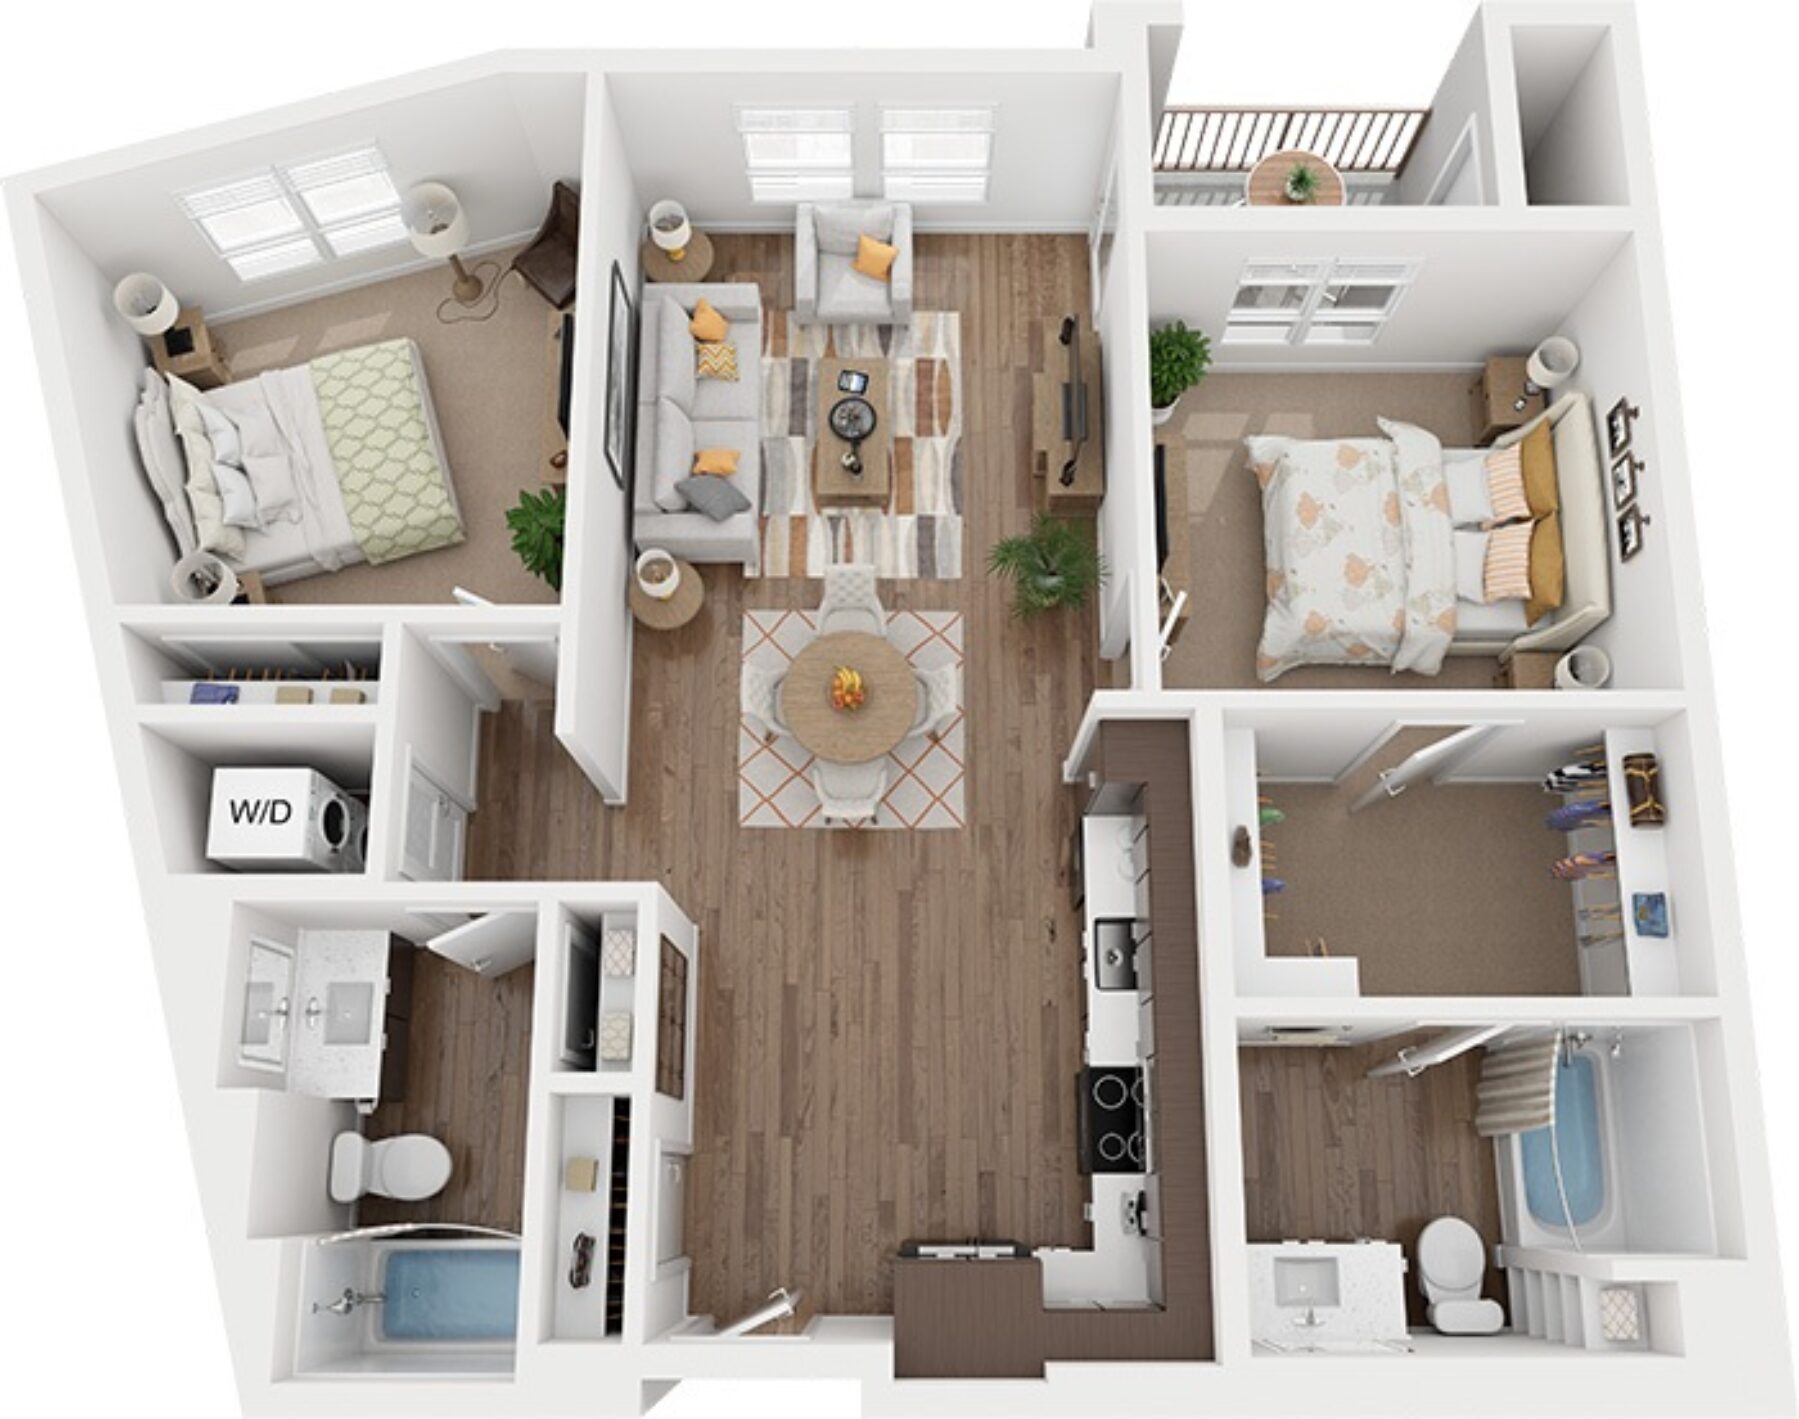 Plan Image: B3 - Two Bedroom